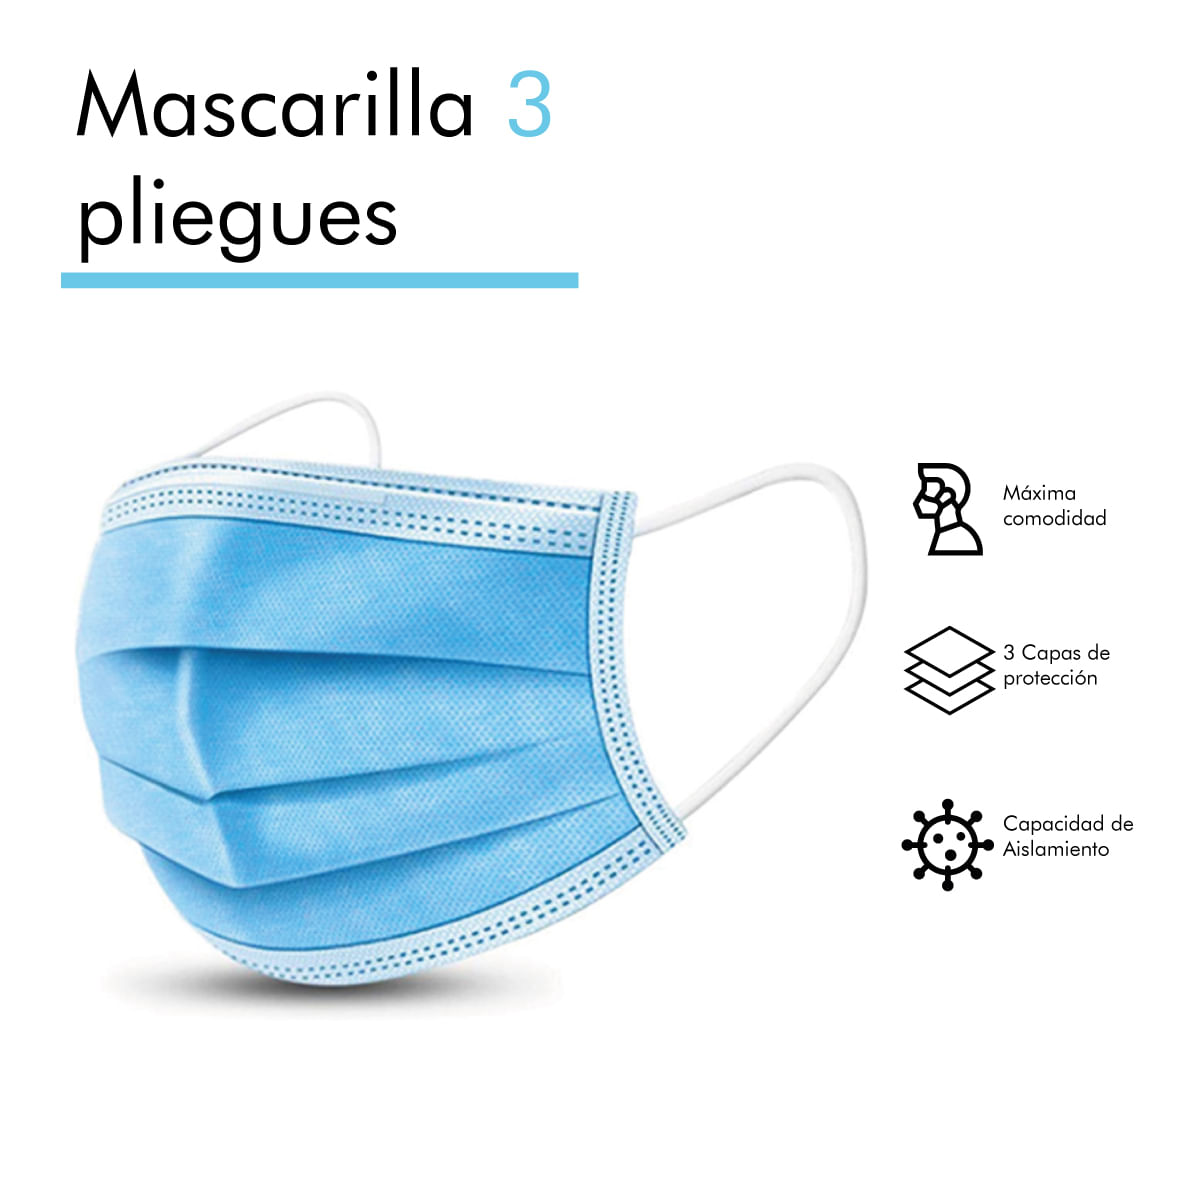 Mascarilla Quirúrgica 3 Pliegues Negra Mayfield x 50 Unidades - Promart